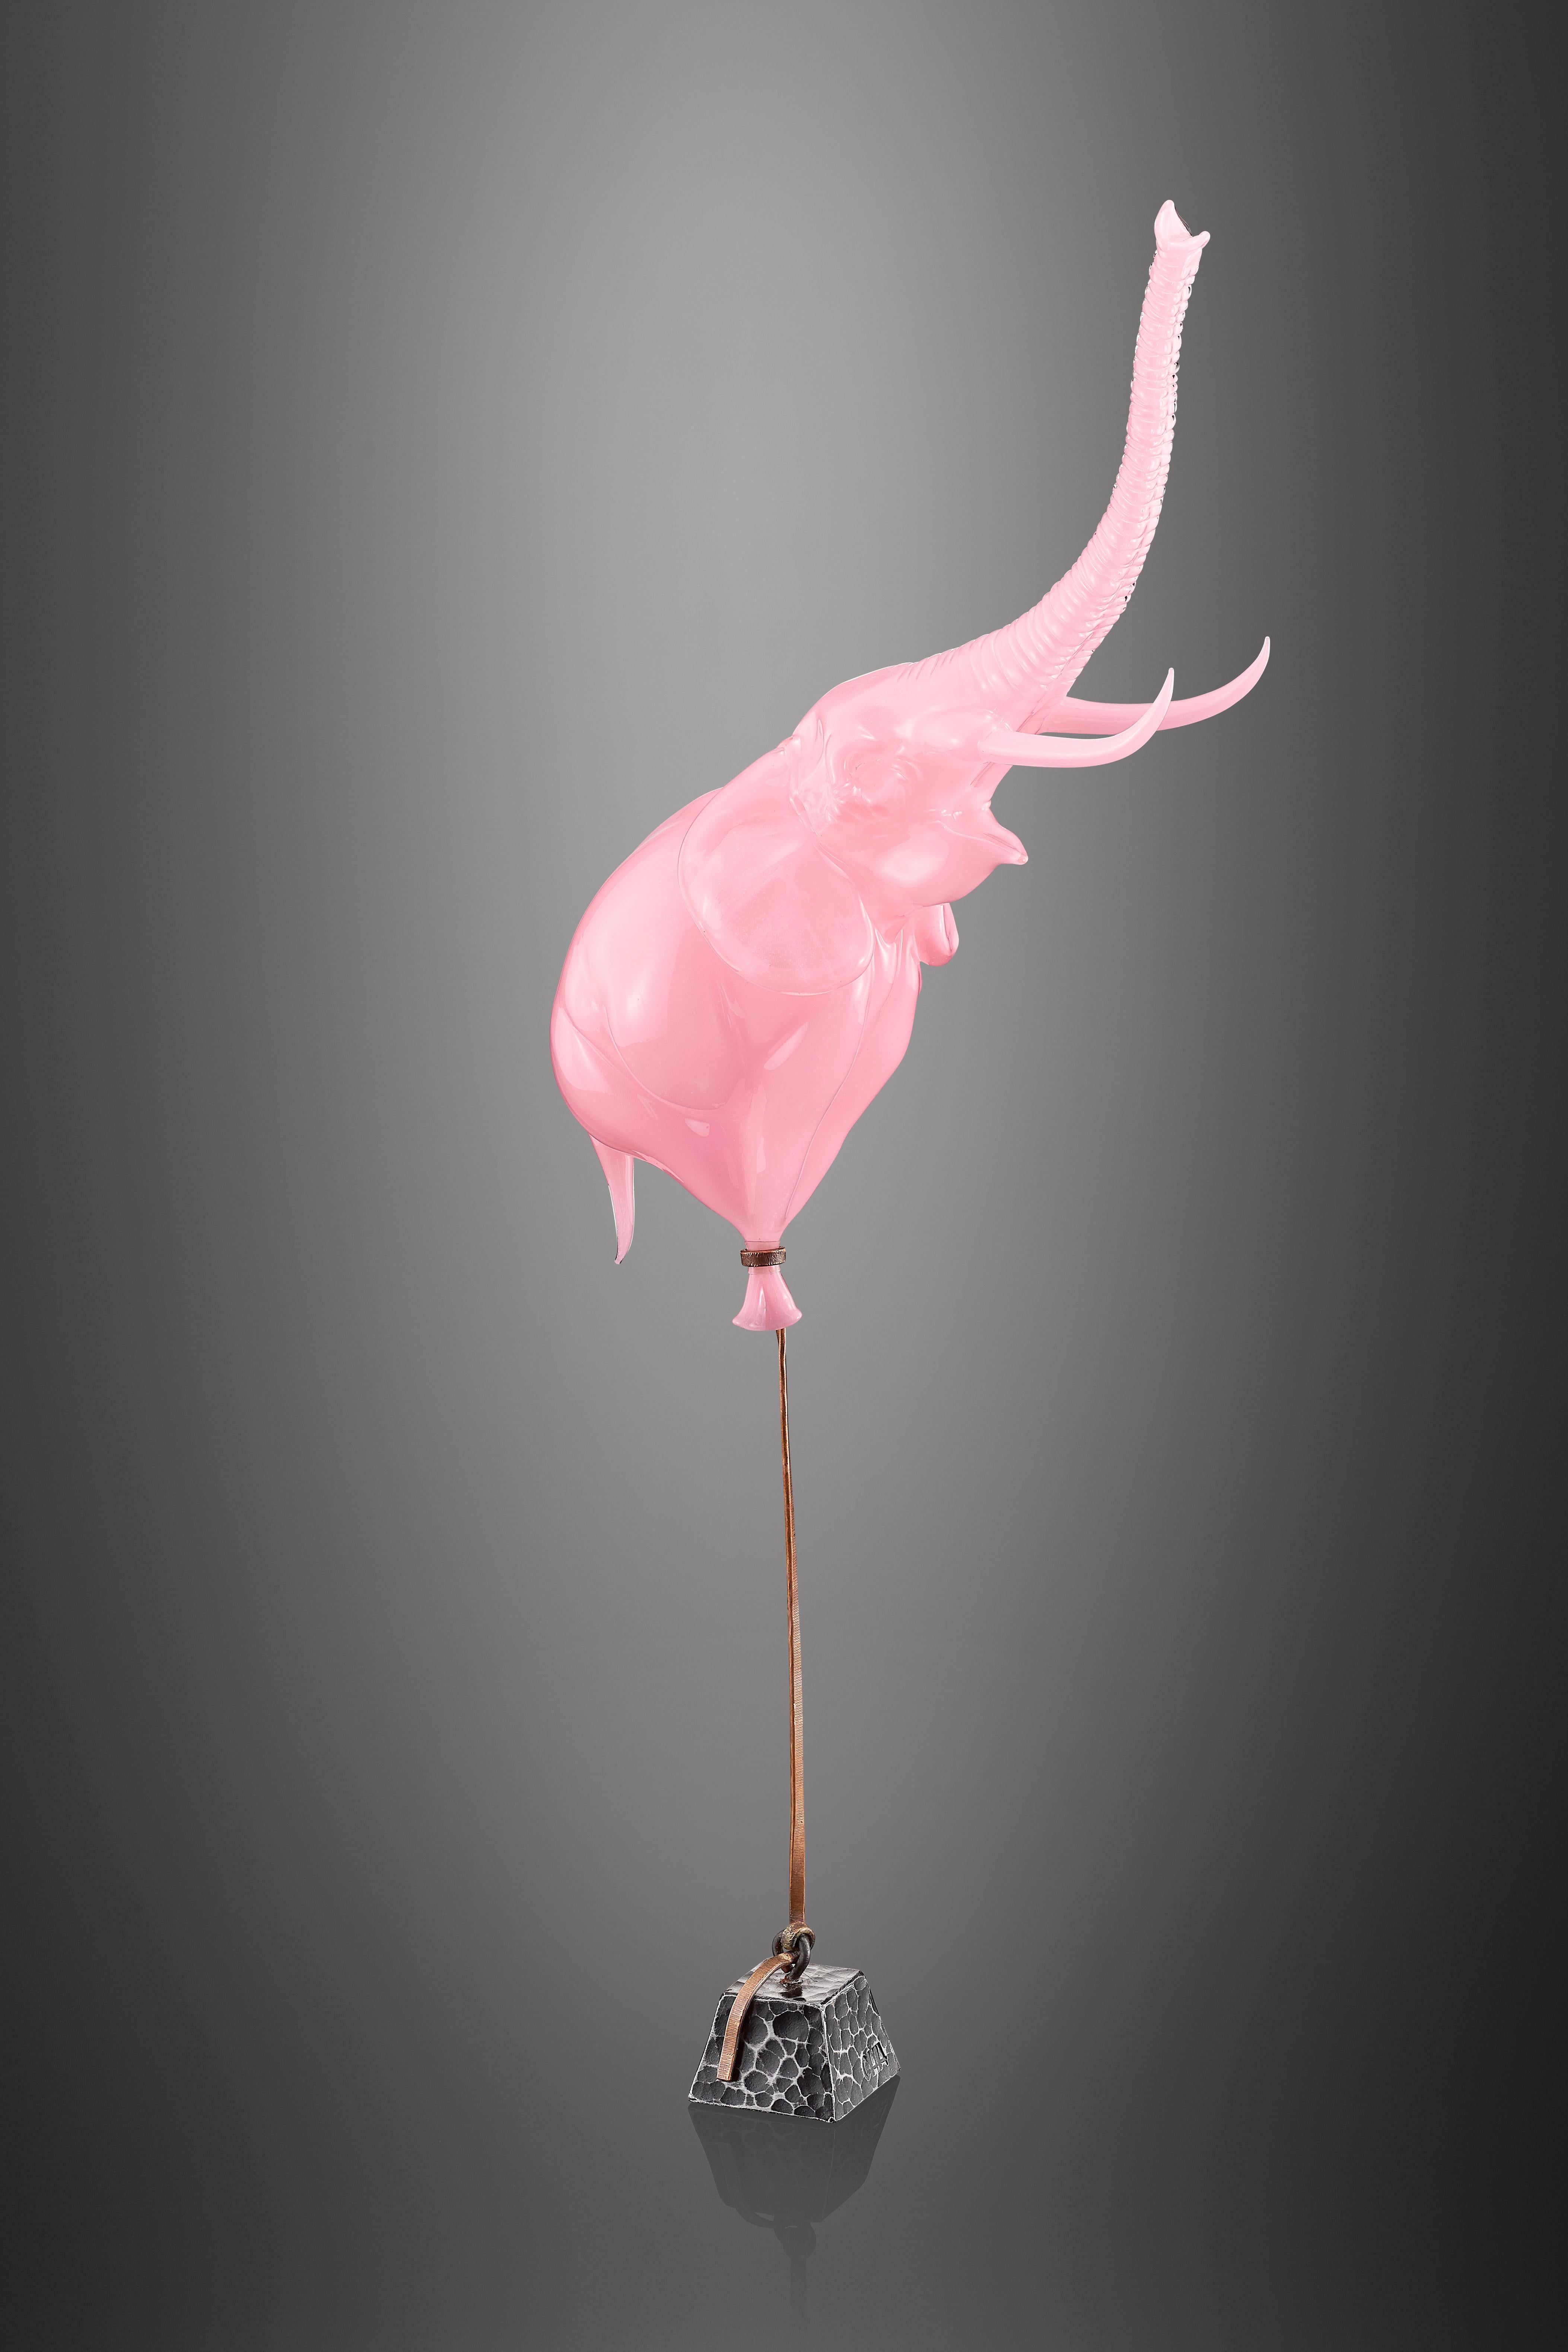 Chris Ahalt Figurative Sculpture - Pink Elephant Balloon